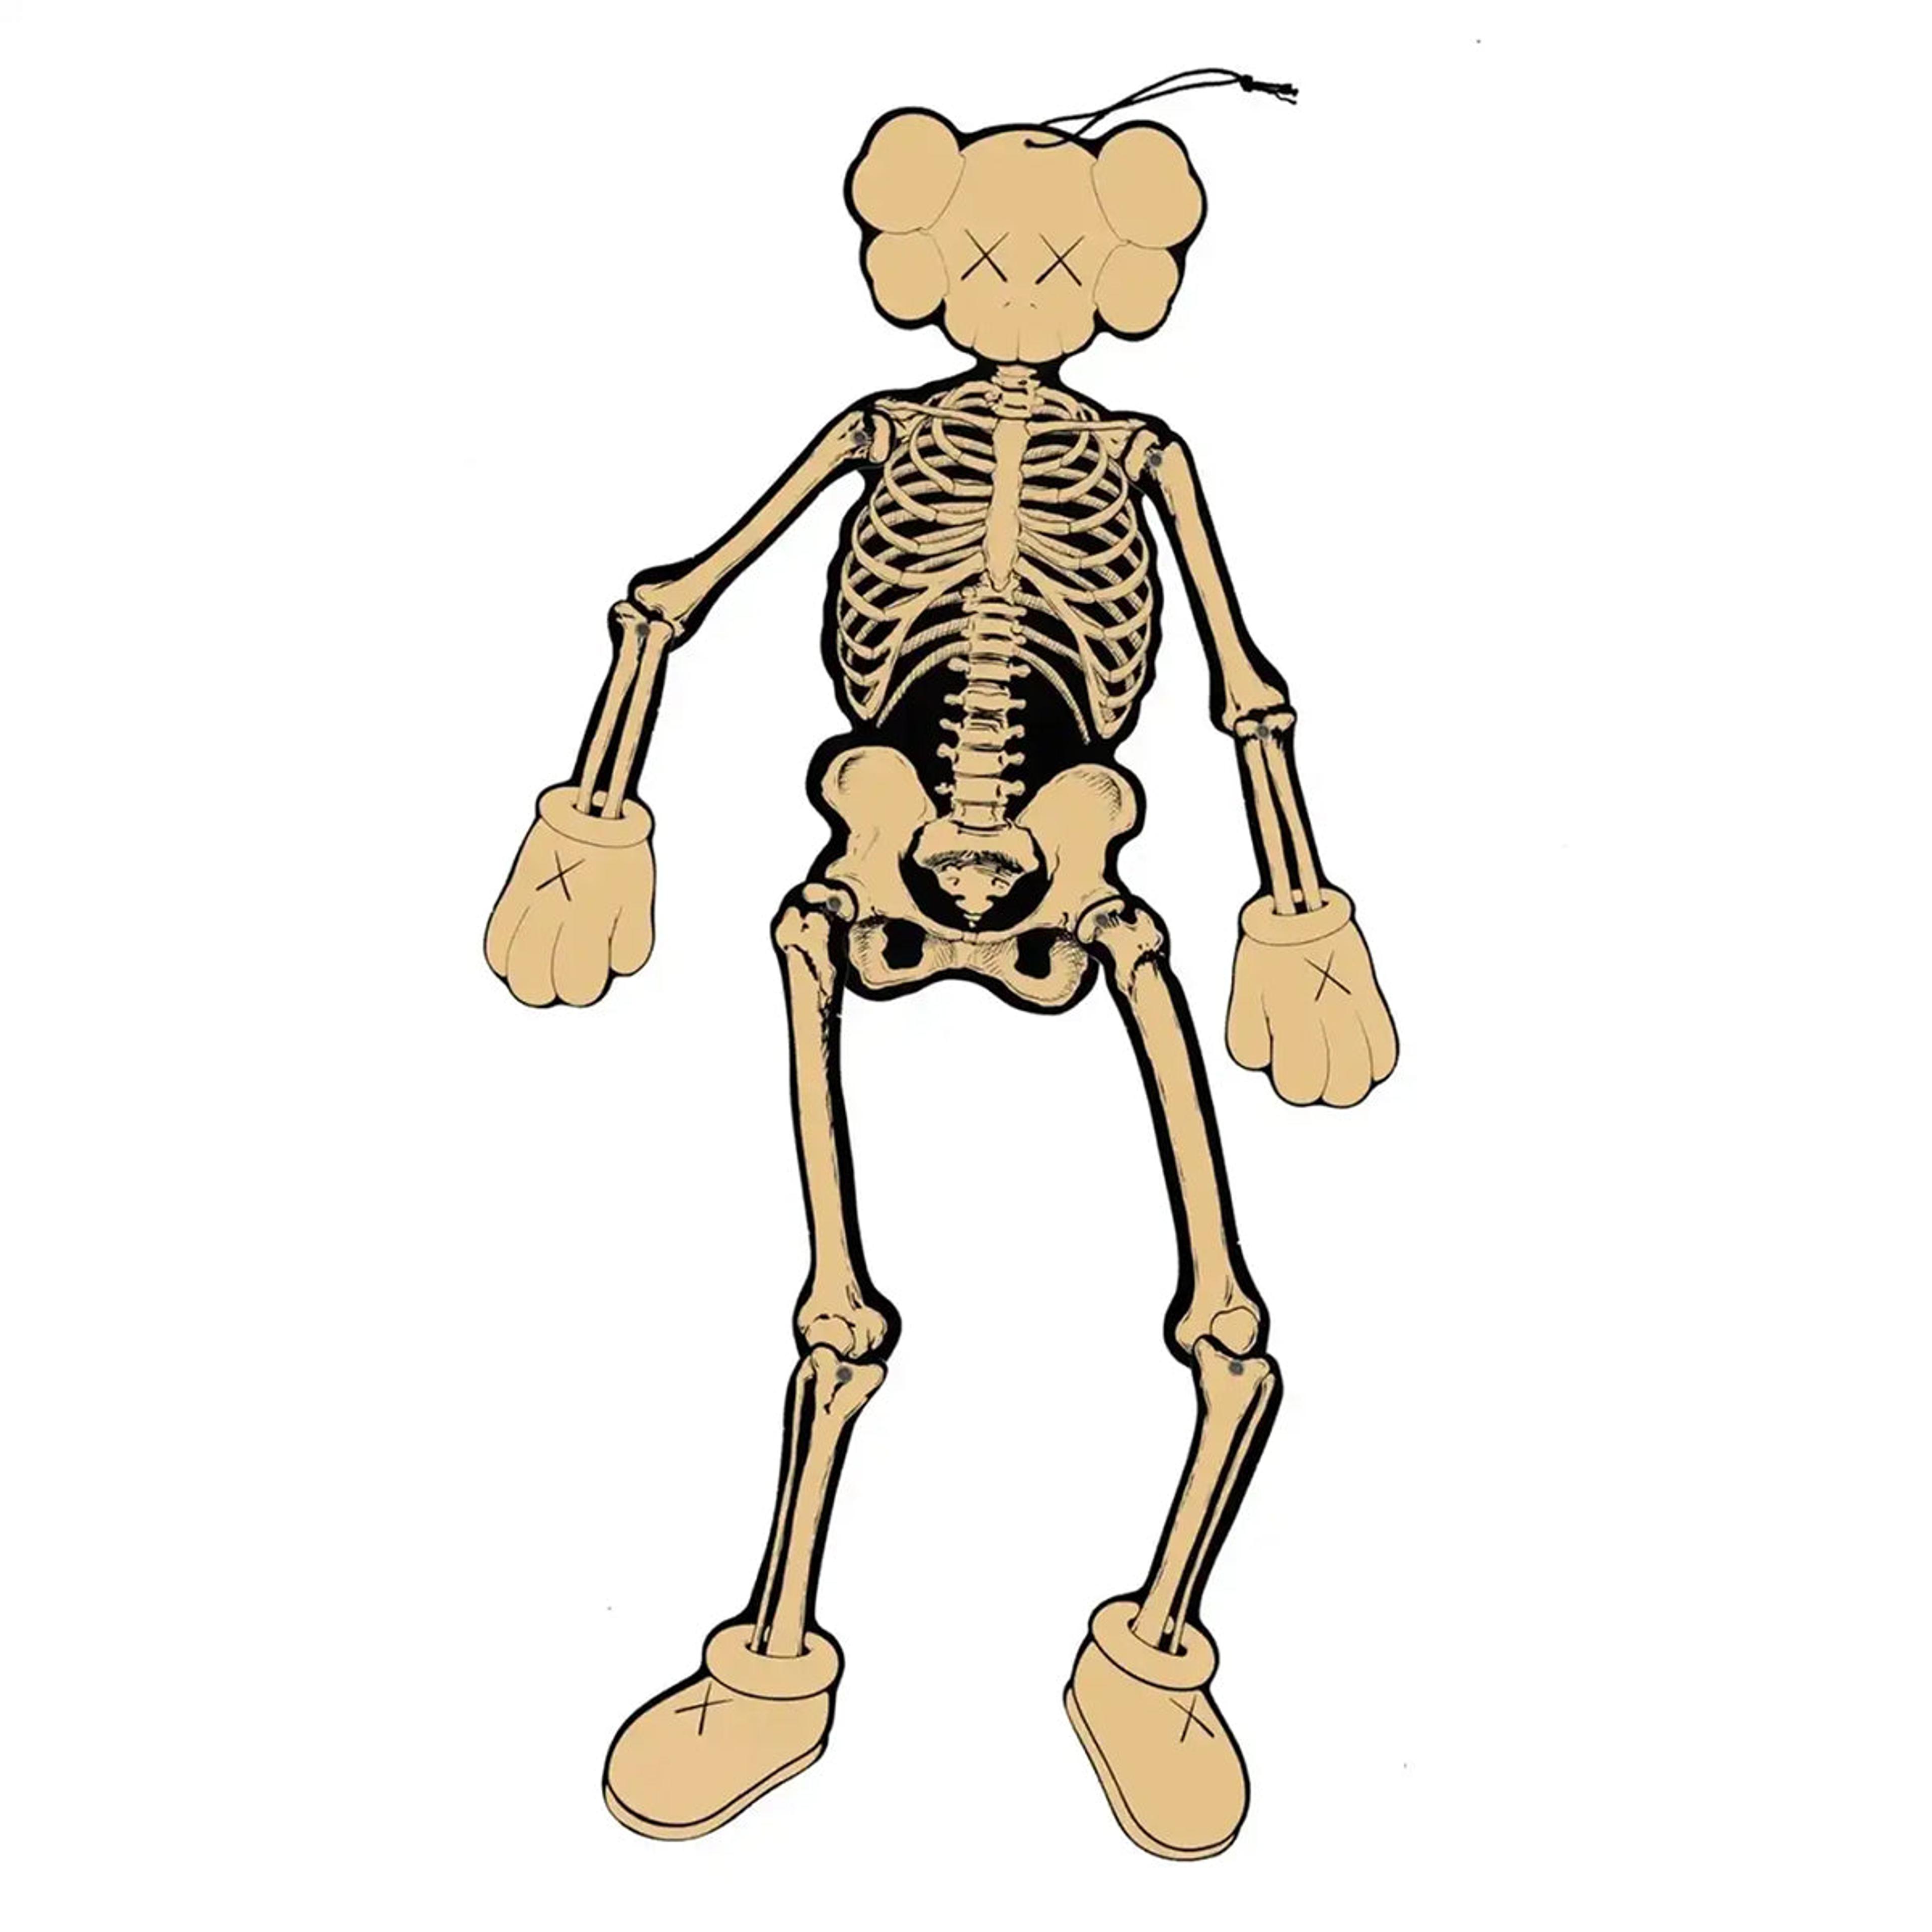 KAWS - "Fortnite Skeleton" - bone